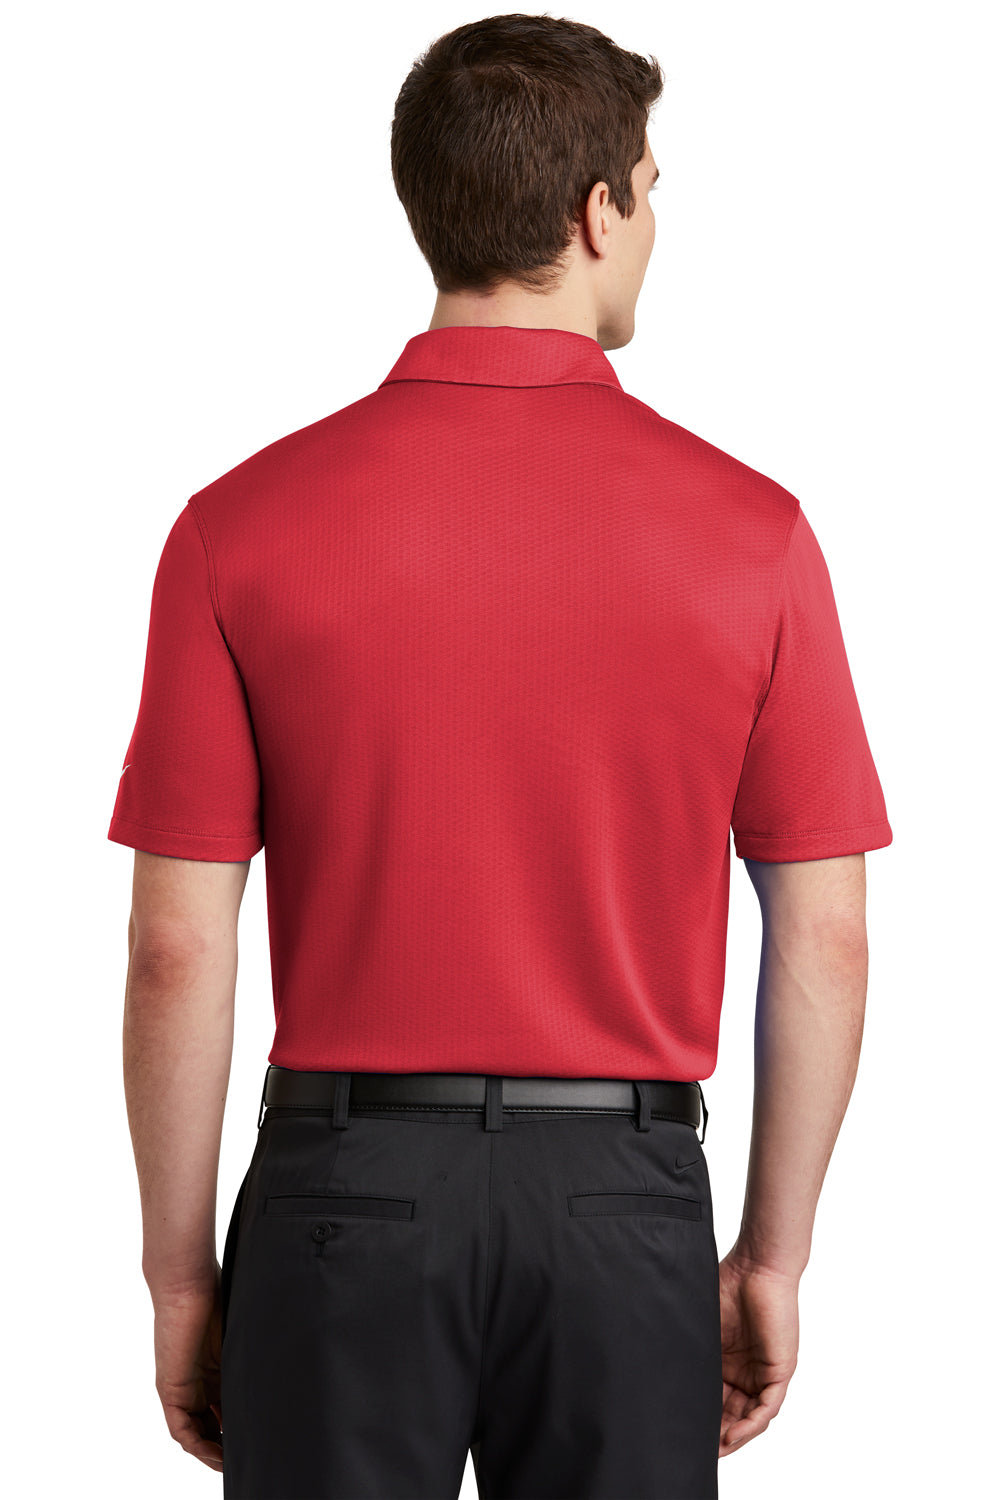 Nike NKAH6266 Mens Dri-Fit Moisture Wicking Short Sleeve Polo Shirt Gym Red Model Back